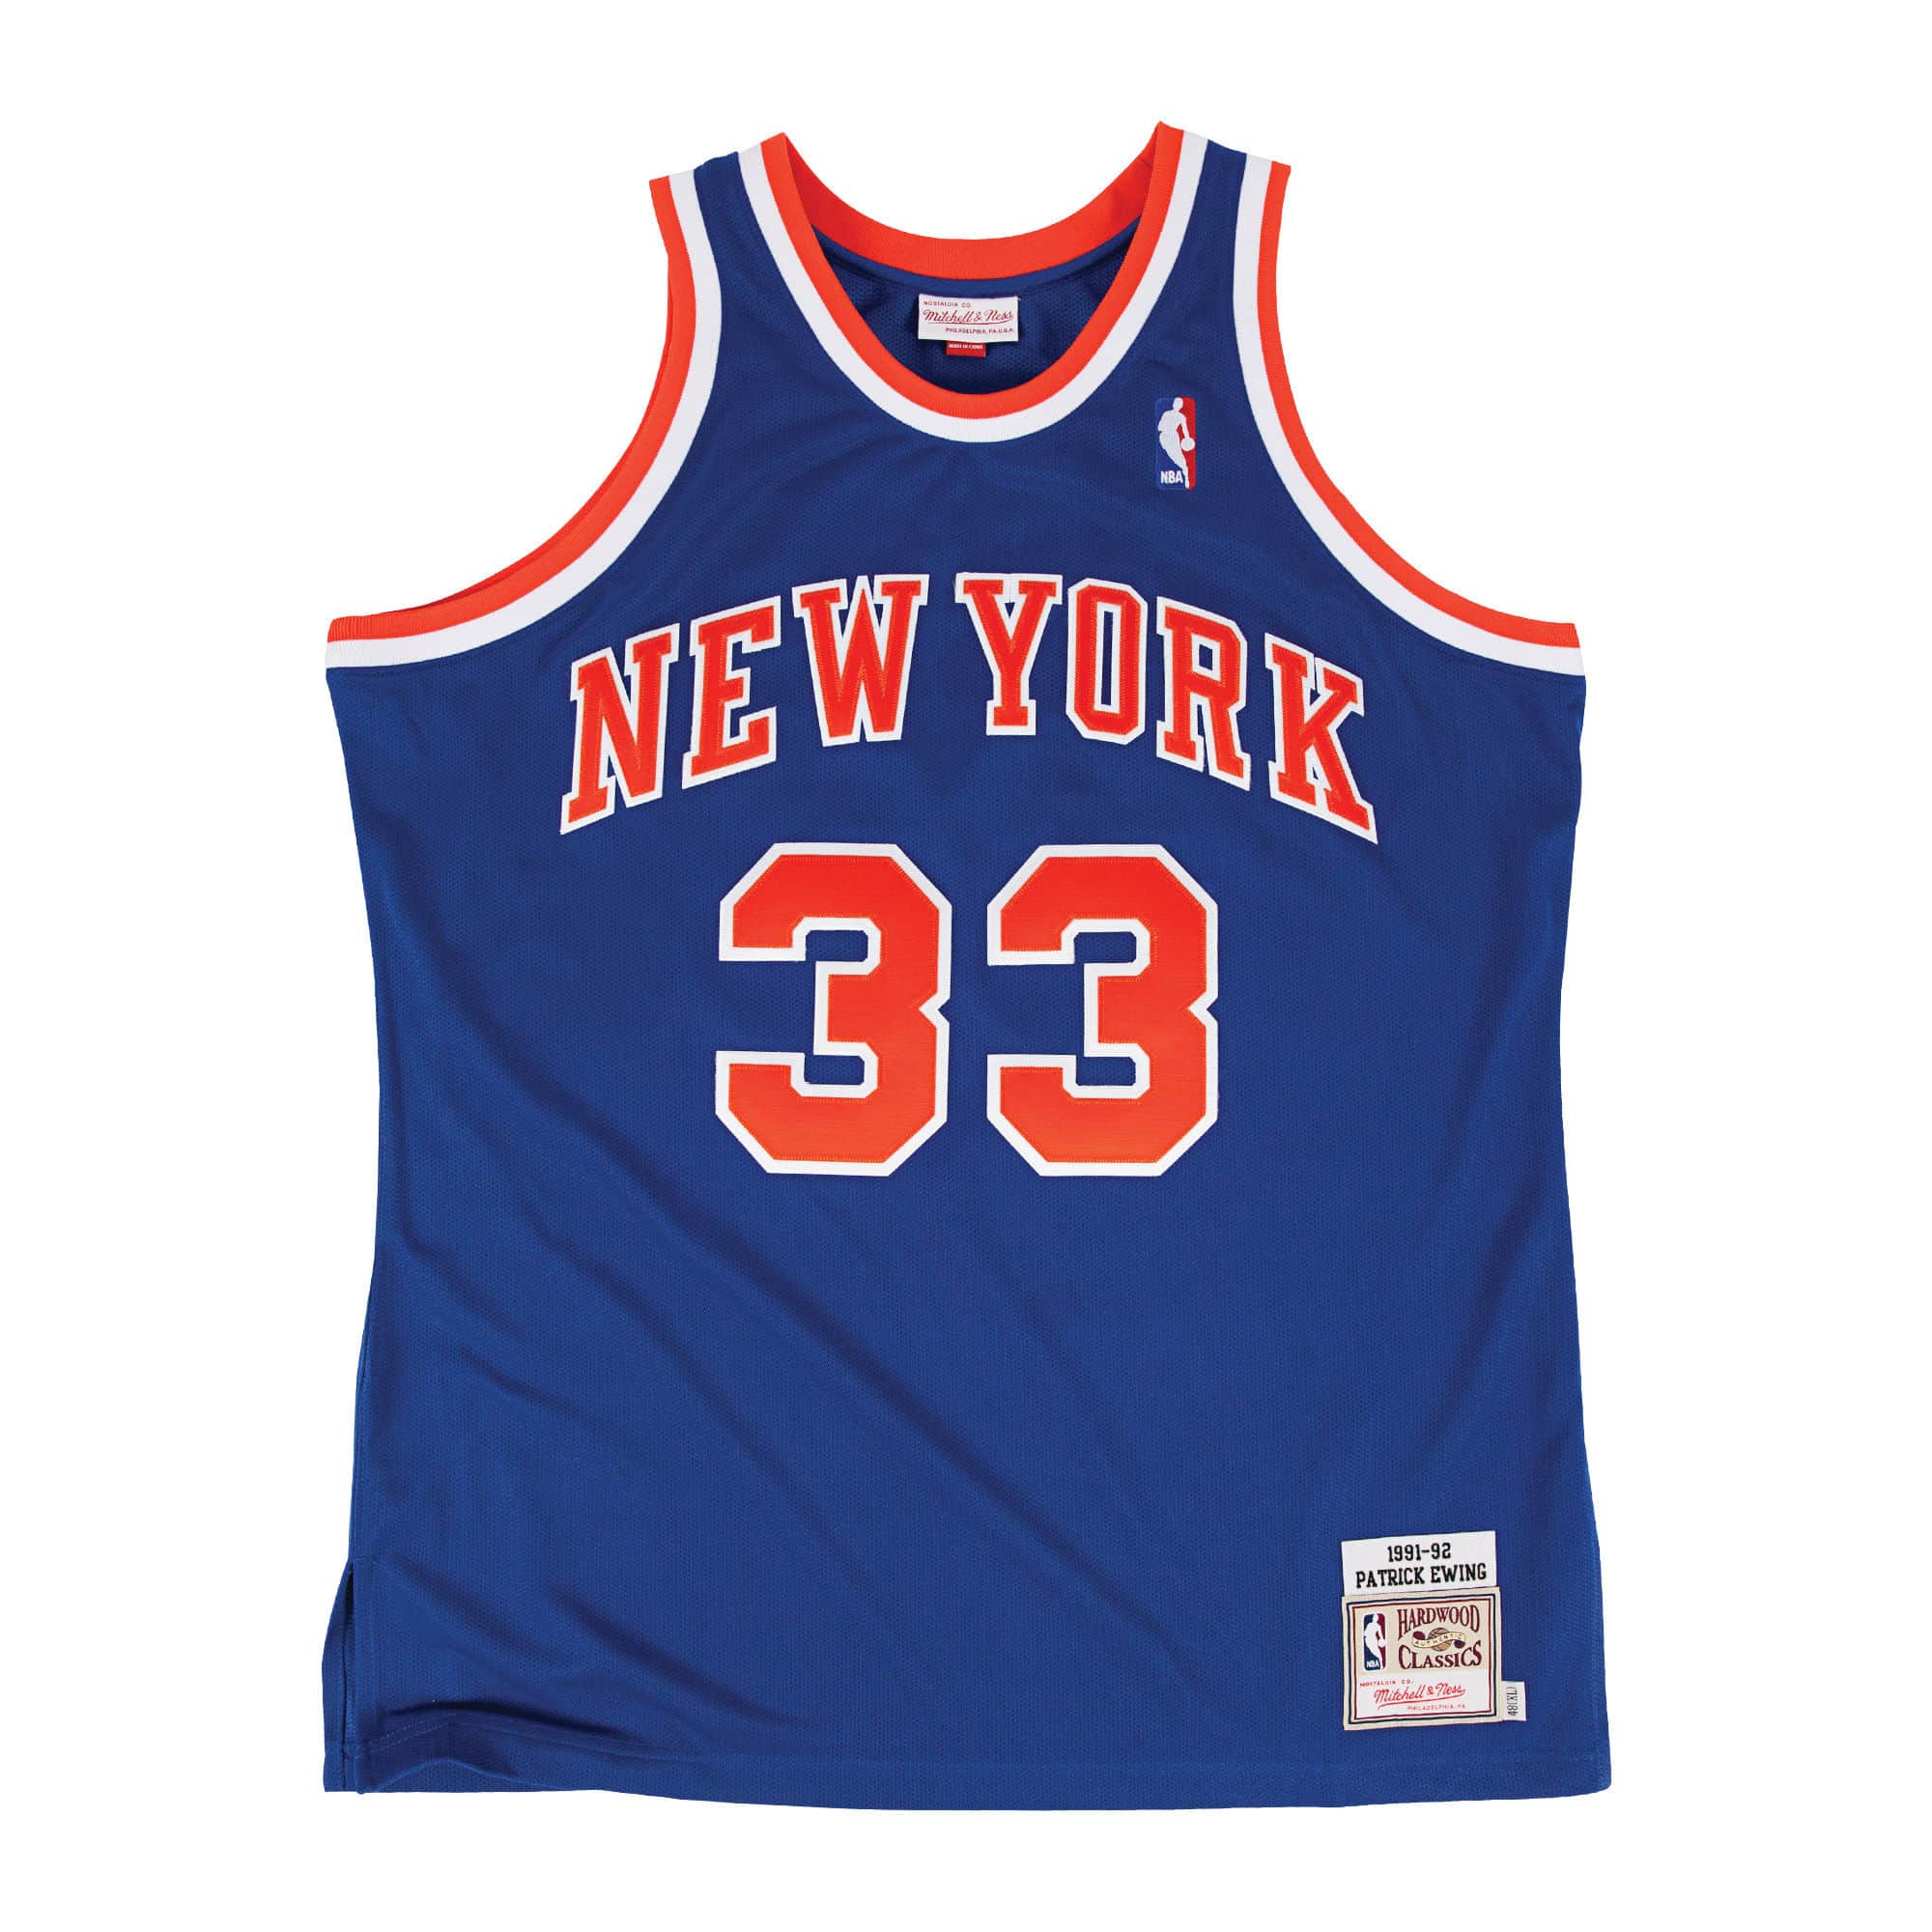 Patrick Ewing New York Knicks 1991-92 Jersey